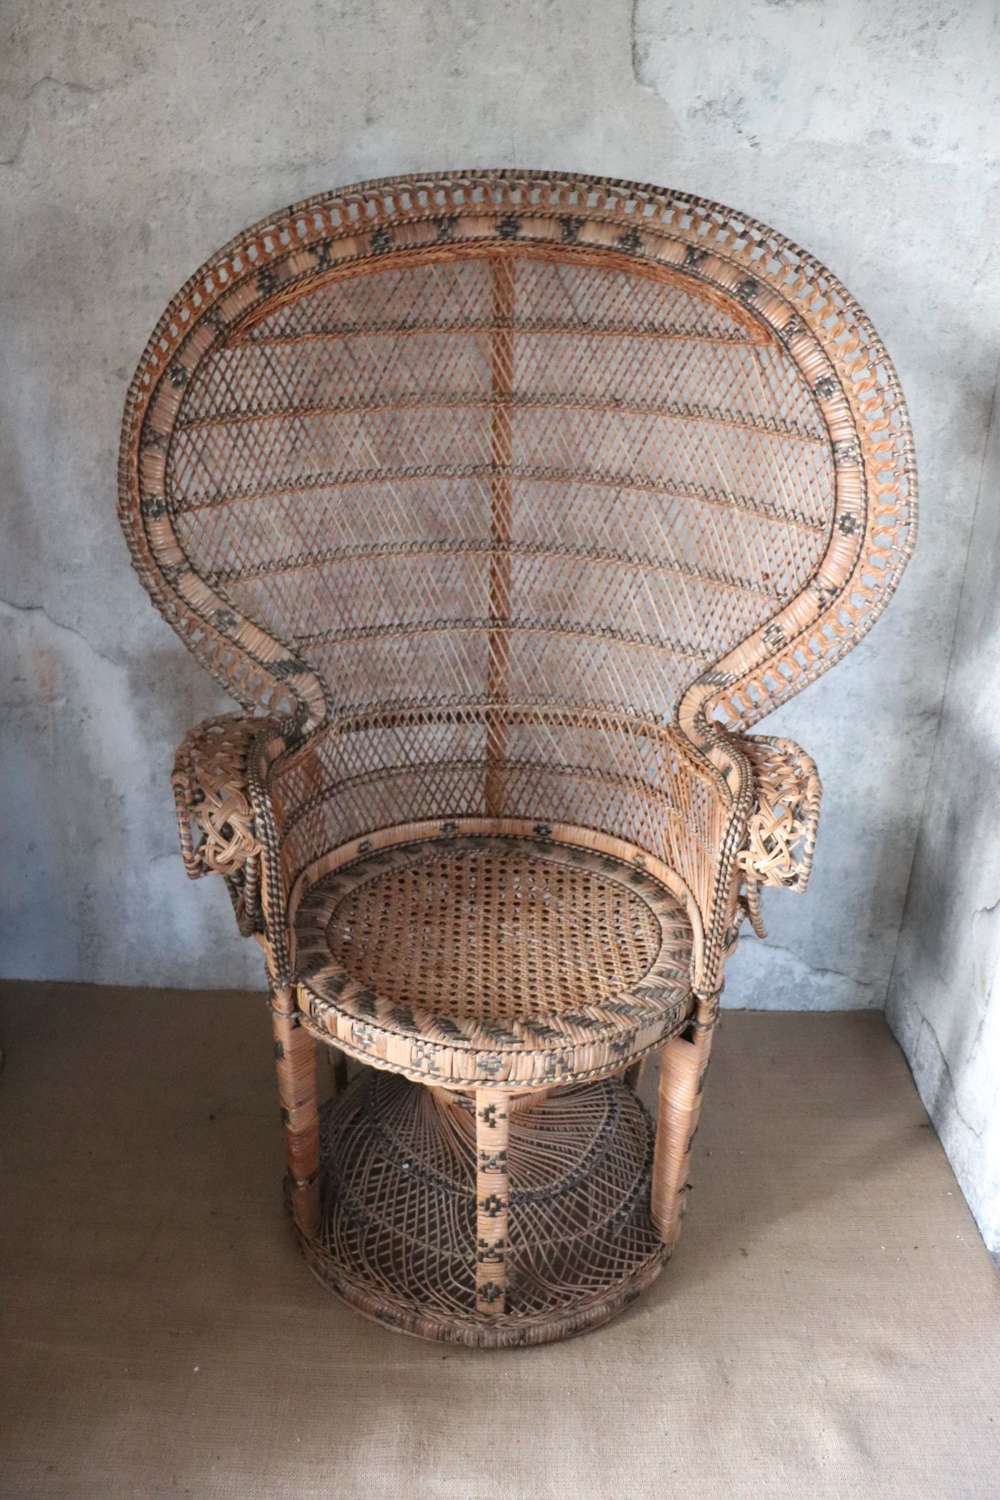 1970s Emmanuelle peacock chair